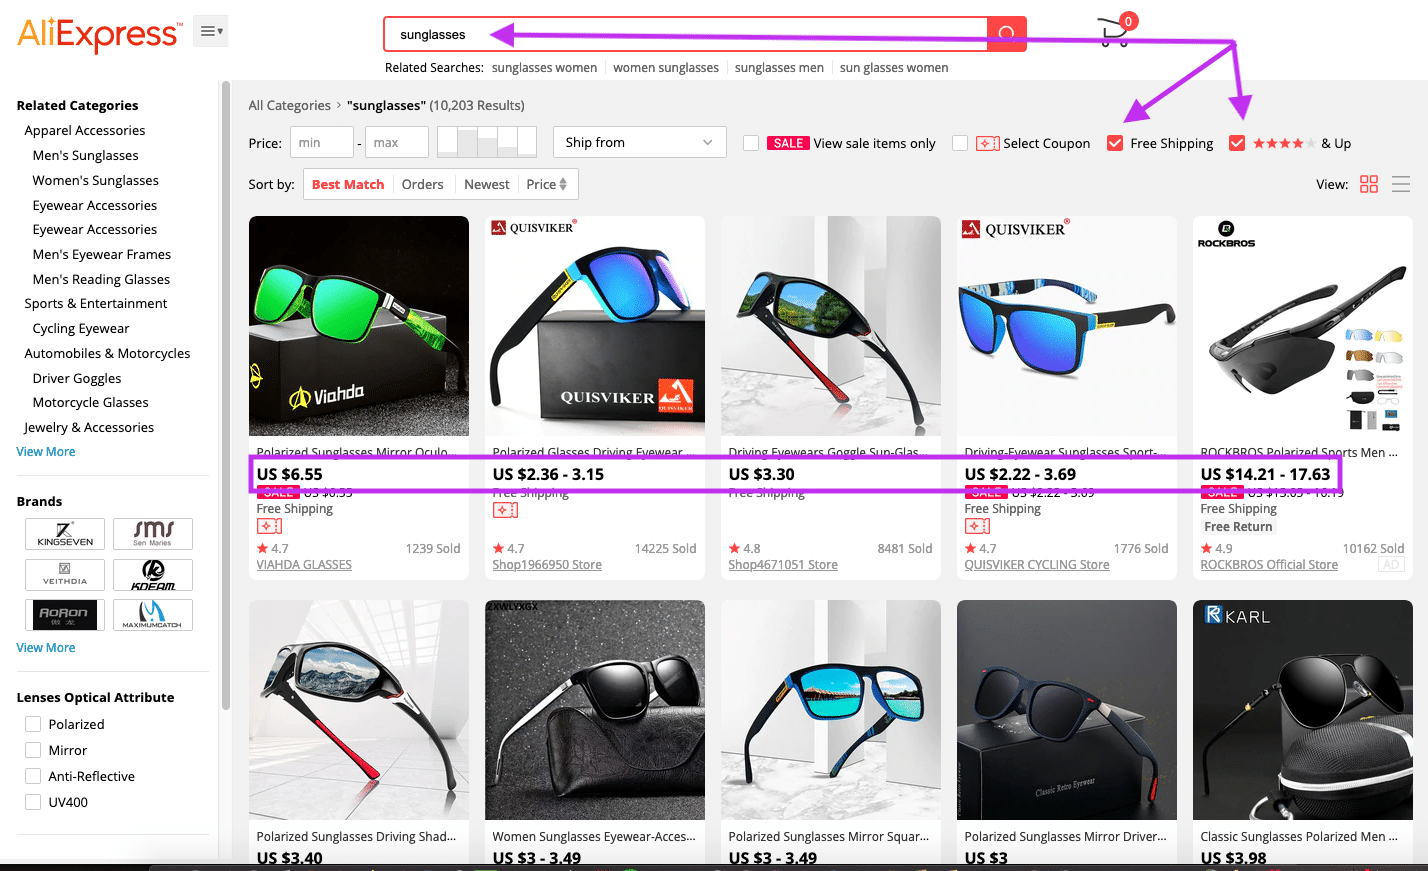 How to buy sunglasses